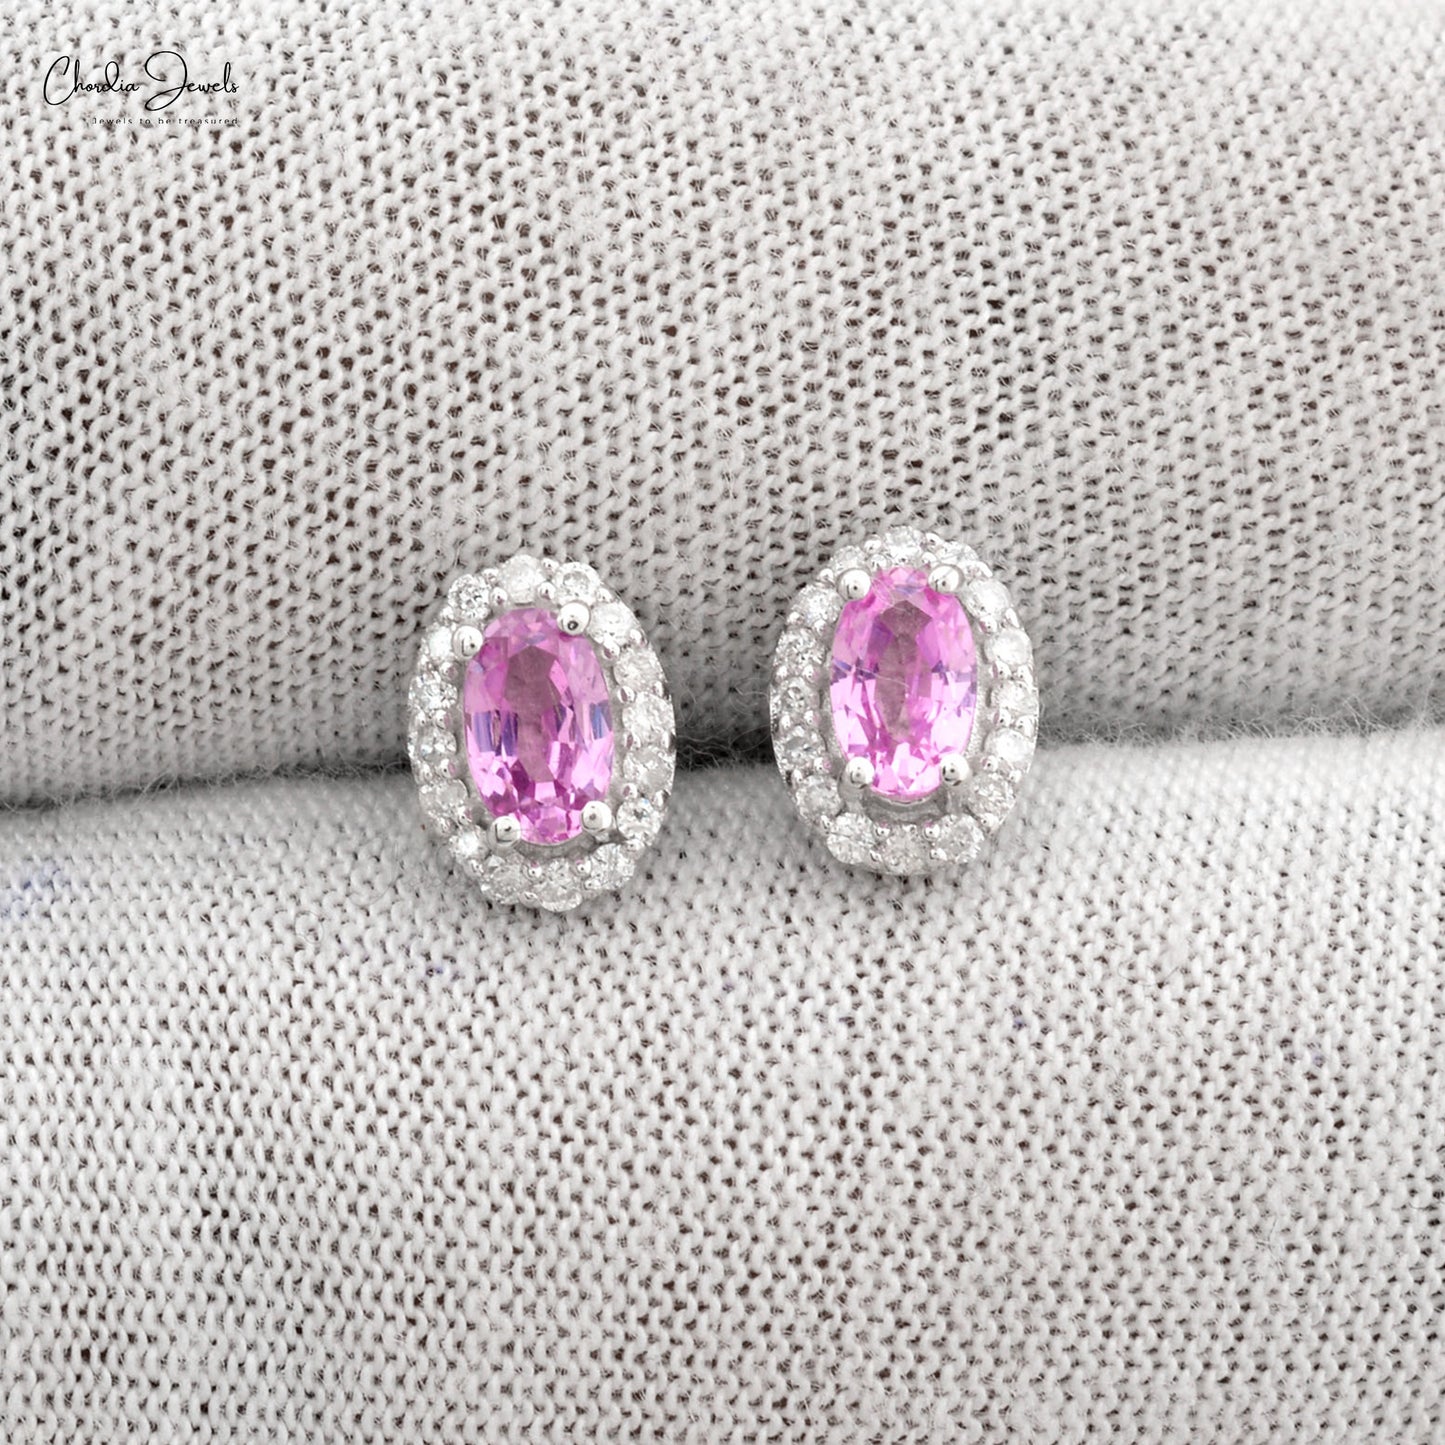 Buy Pink Sapphire Halo Earrings